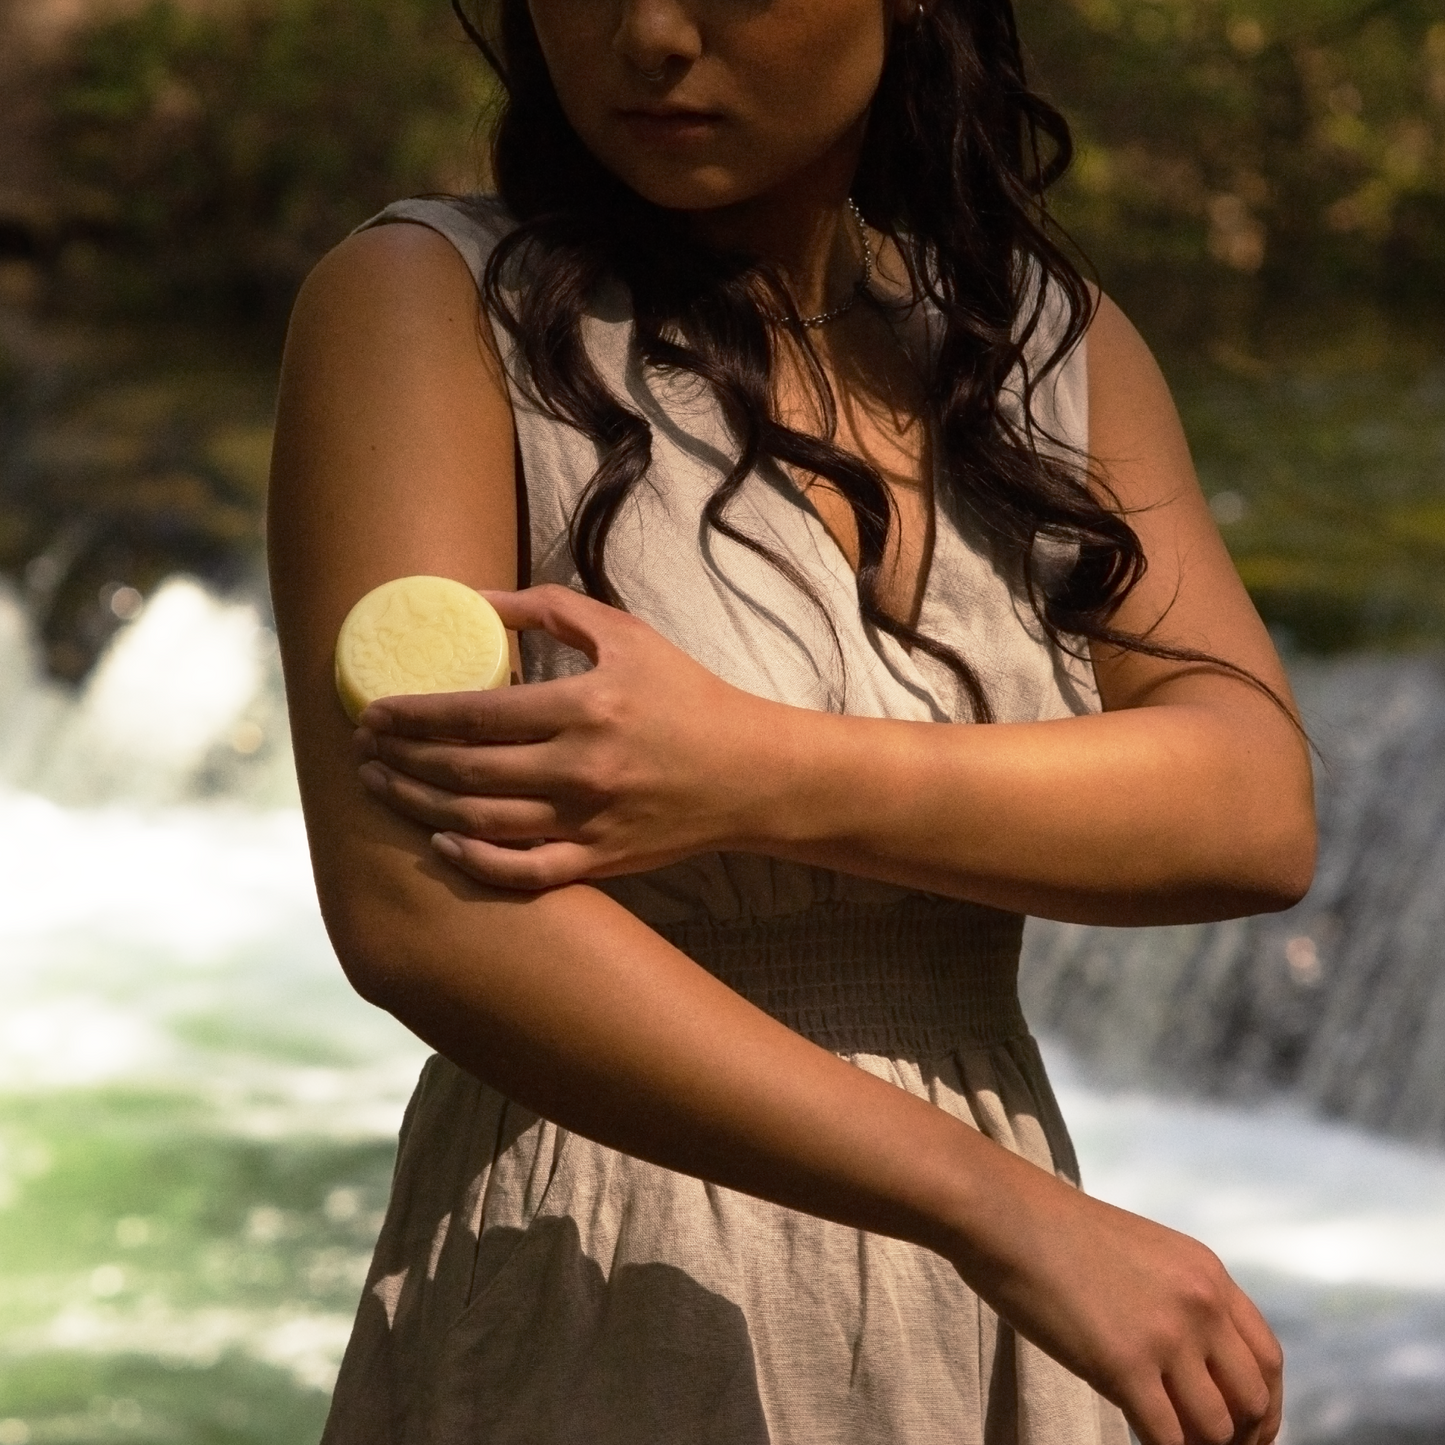 Moon Valley Organics Herbal Lotion Bar Woman rubs lotion bar on her arm